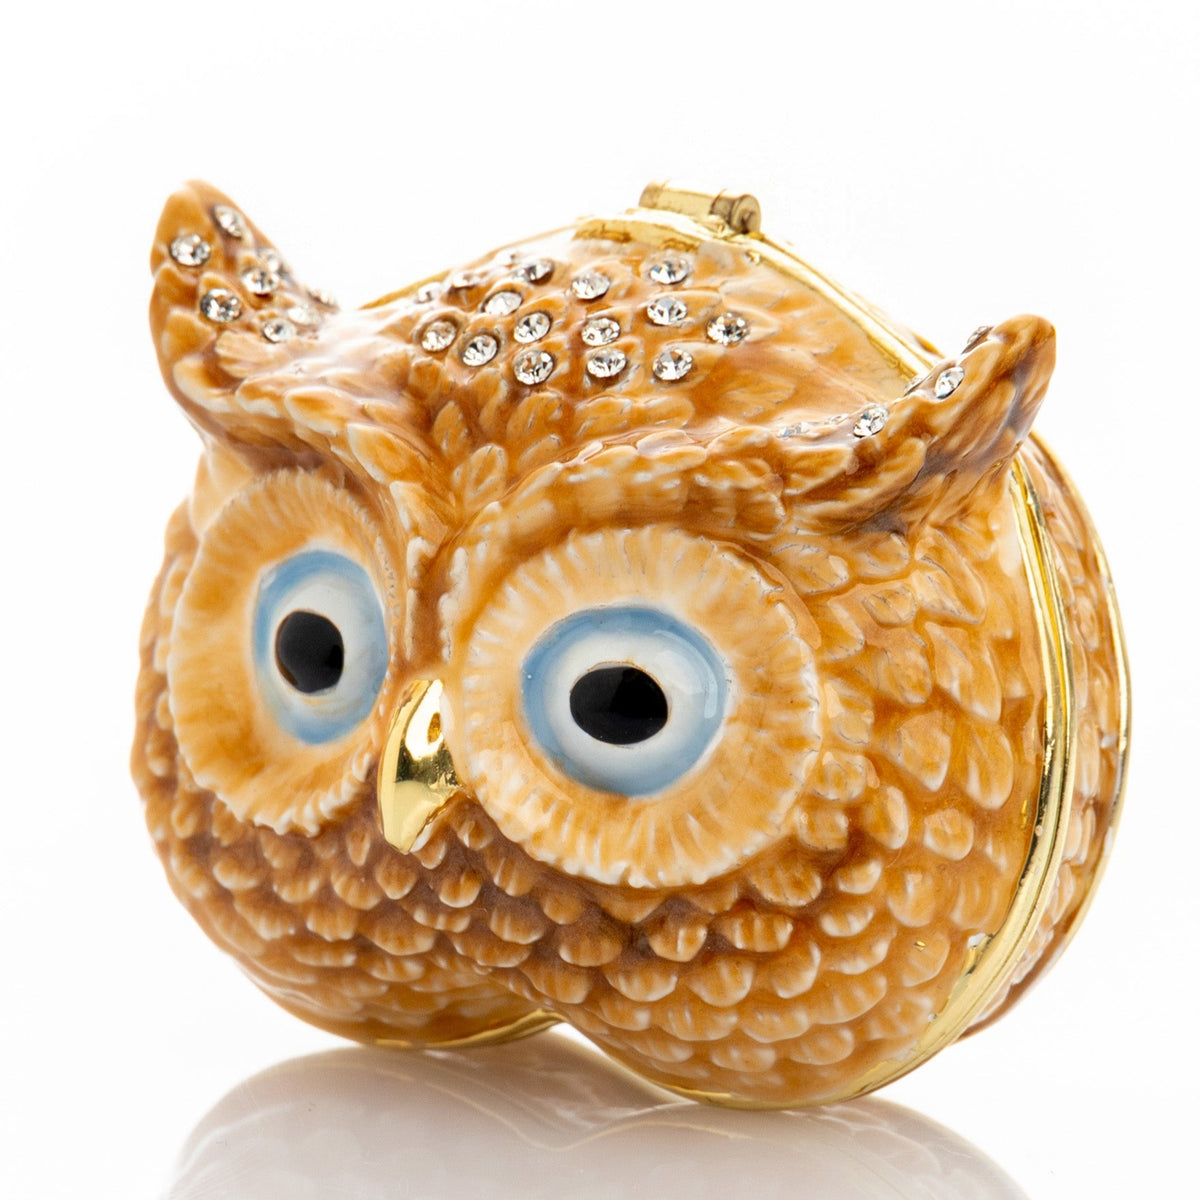 Brown Owl face trinket box